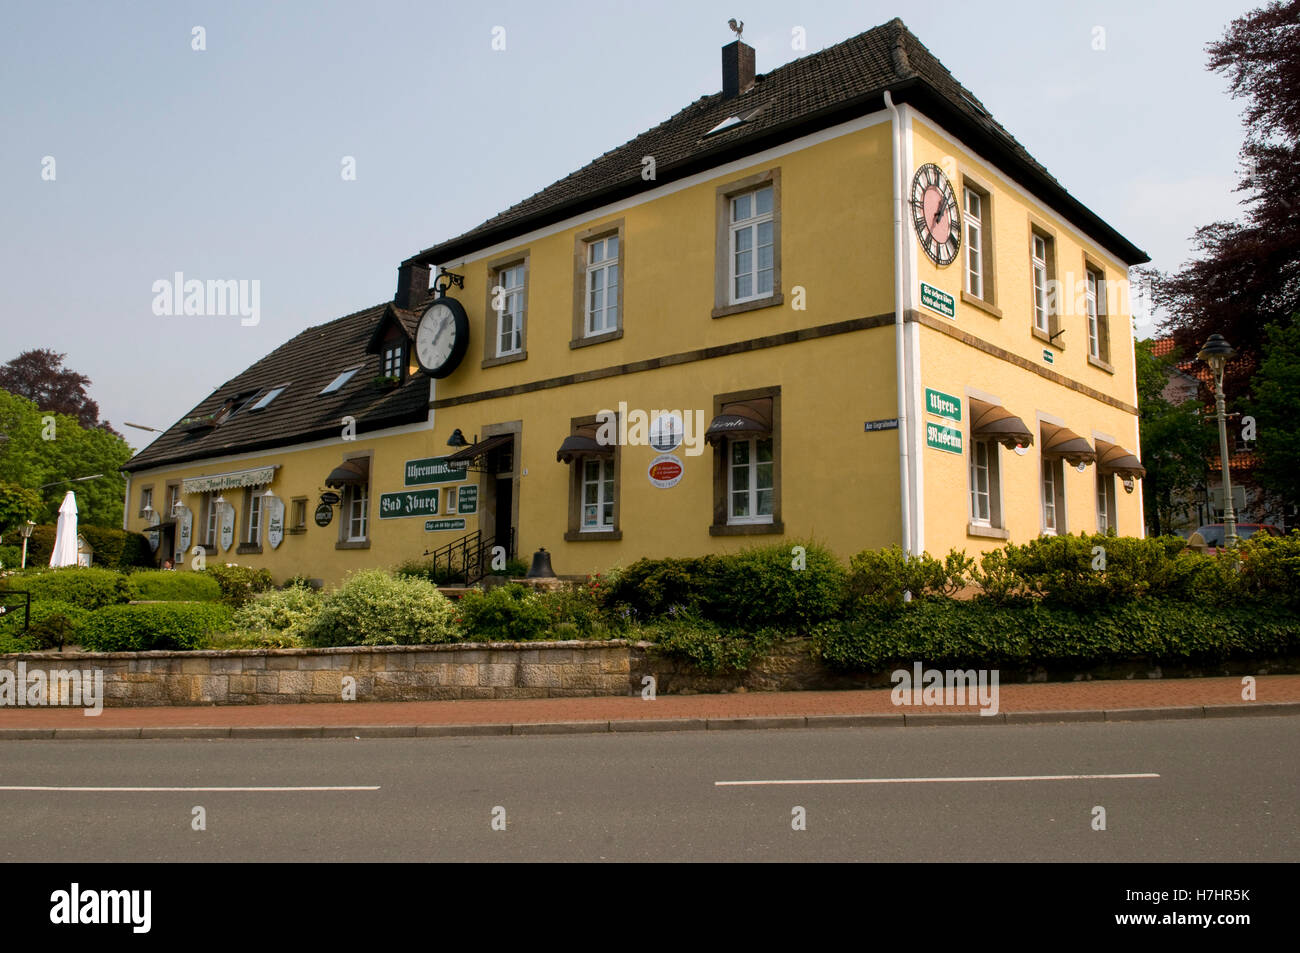 Uhrenmuseum museo di orologi e coffeehouse, Bad Iburg, Osnabruecker regione Land Bassa Sassonia Foto Stock